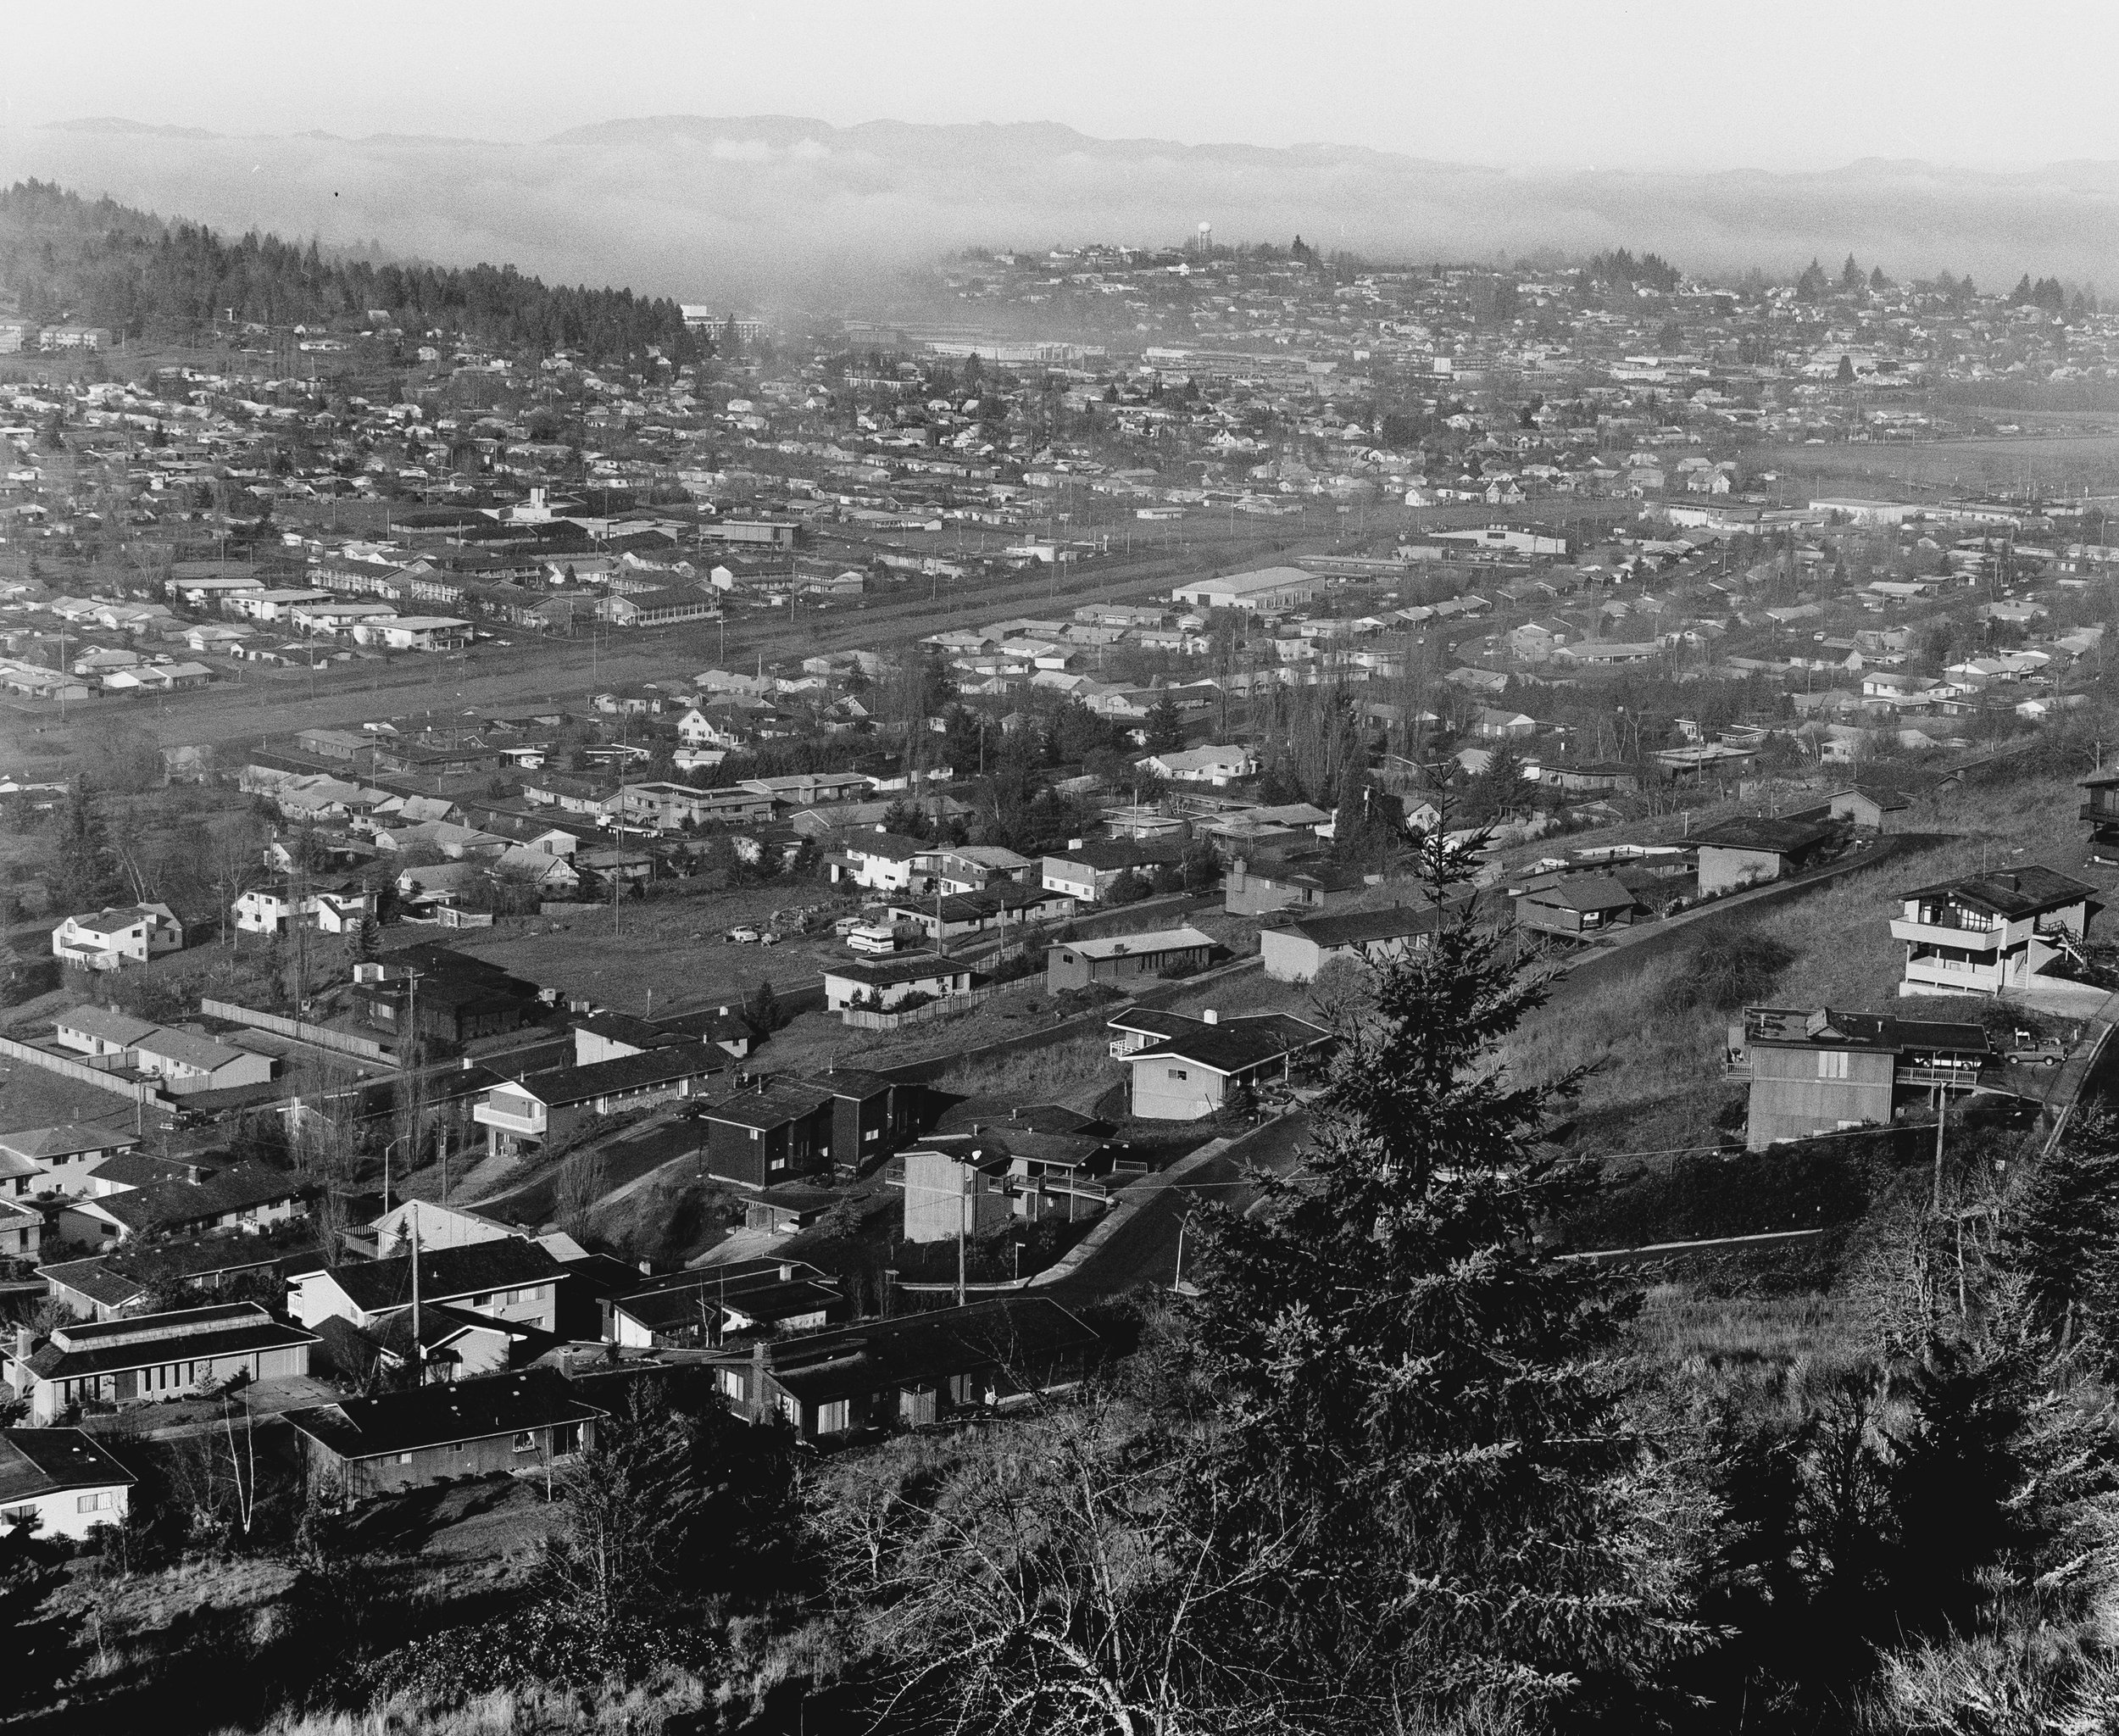   View of Eugene, Oregon, 1975  